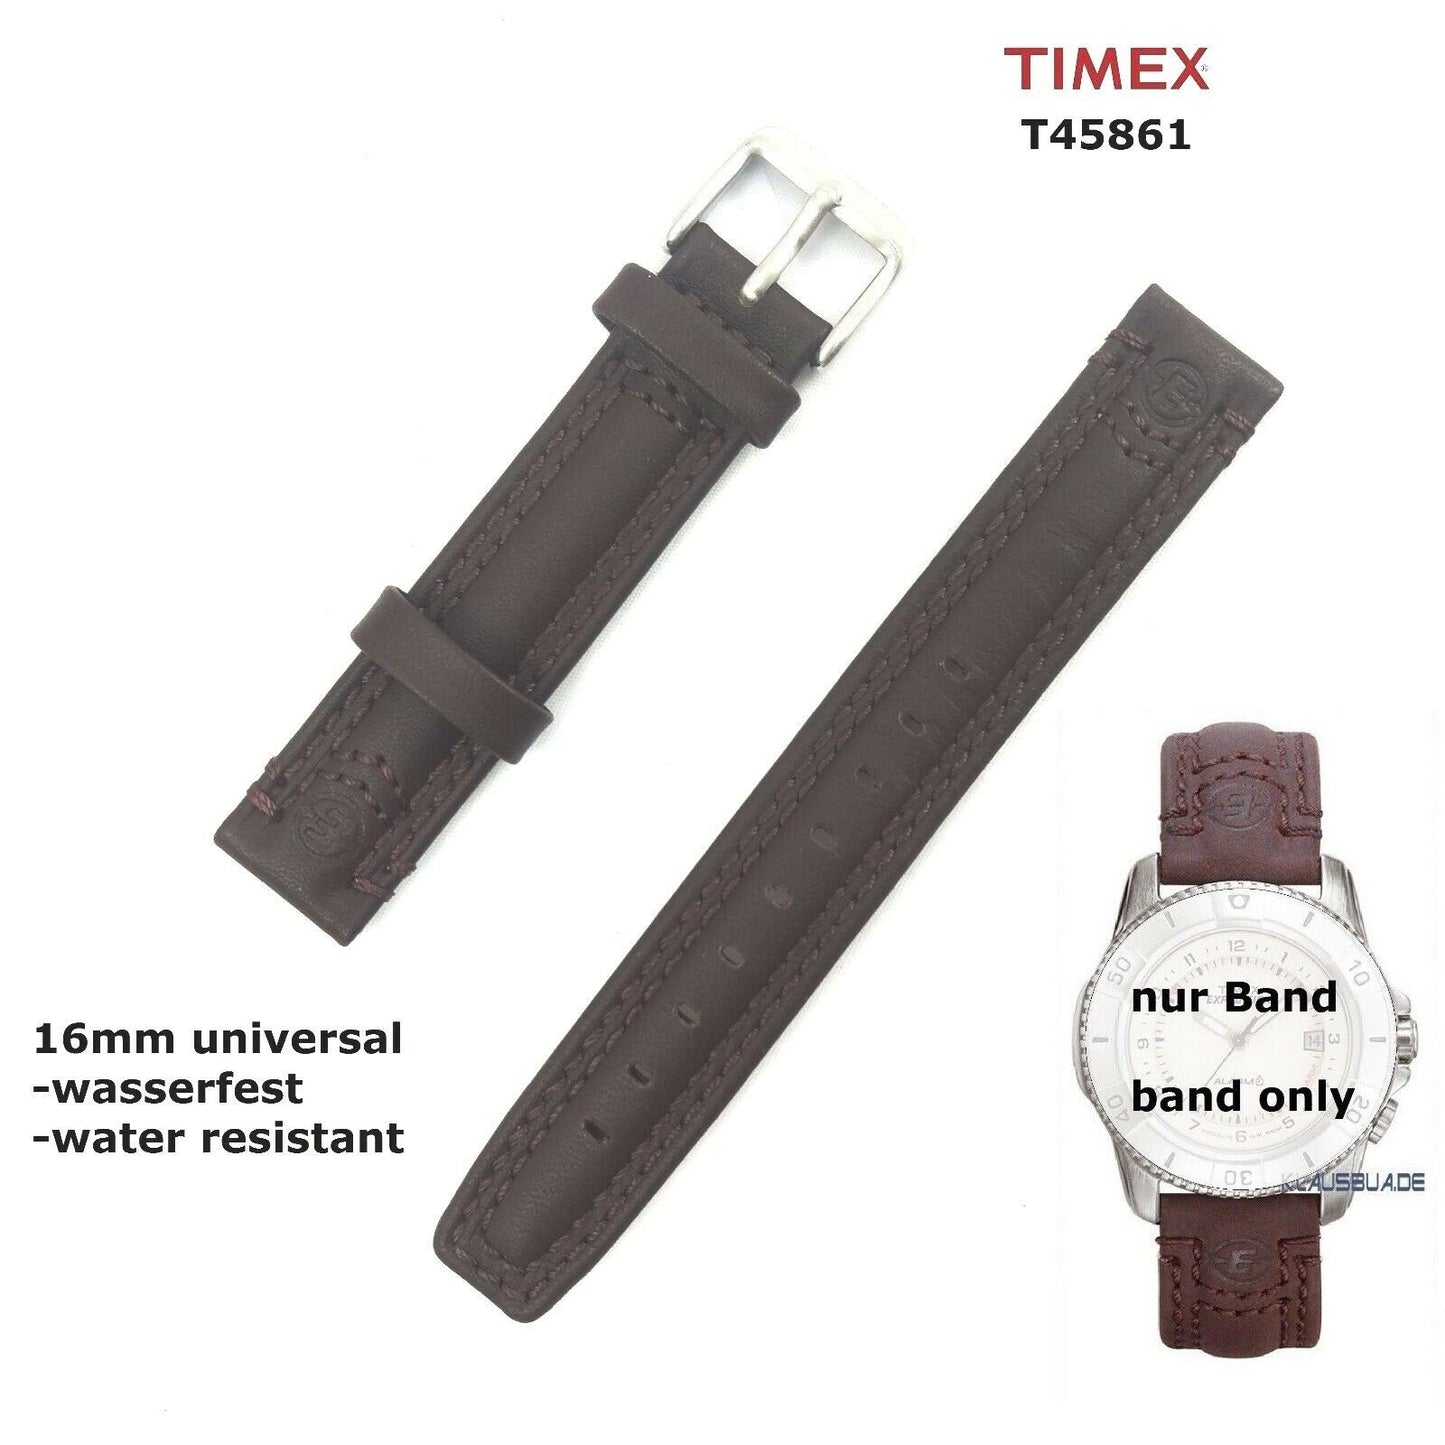 TIMEX Ersatzarmband T45861 EXPEDITION Easy Set Alarm - 16mm universal wasserfest